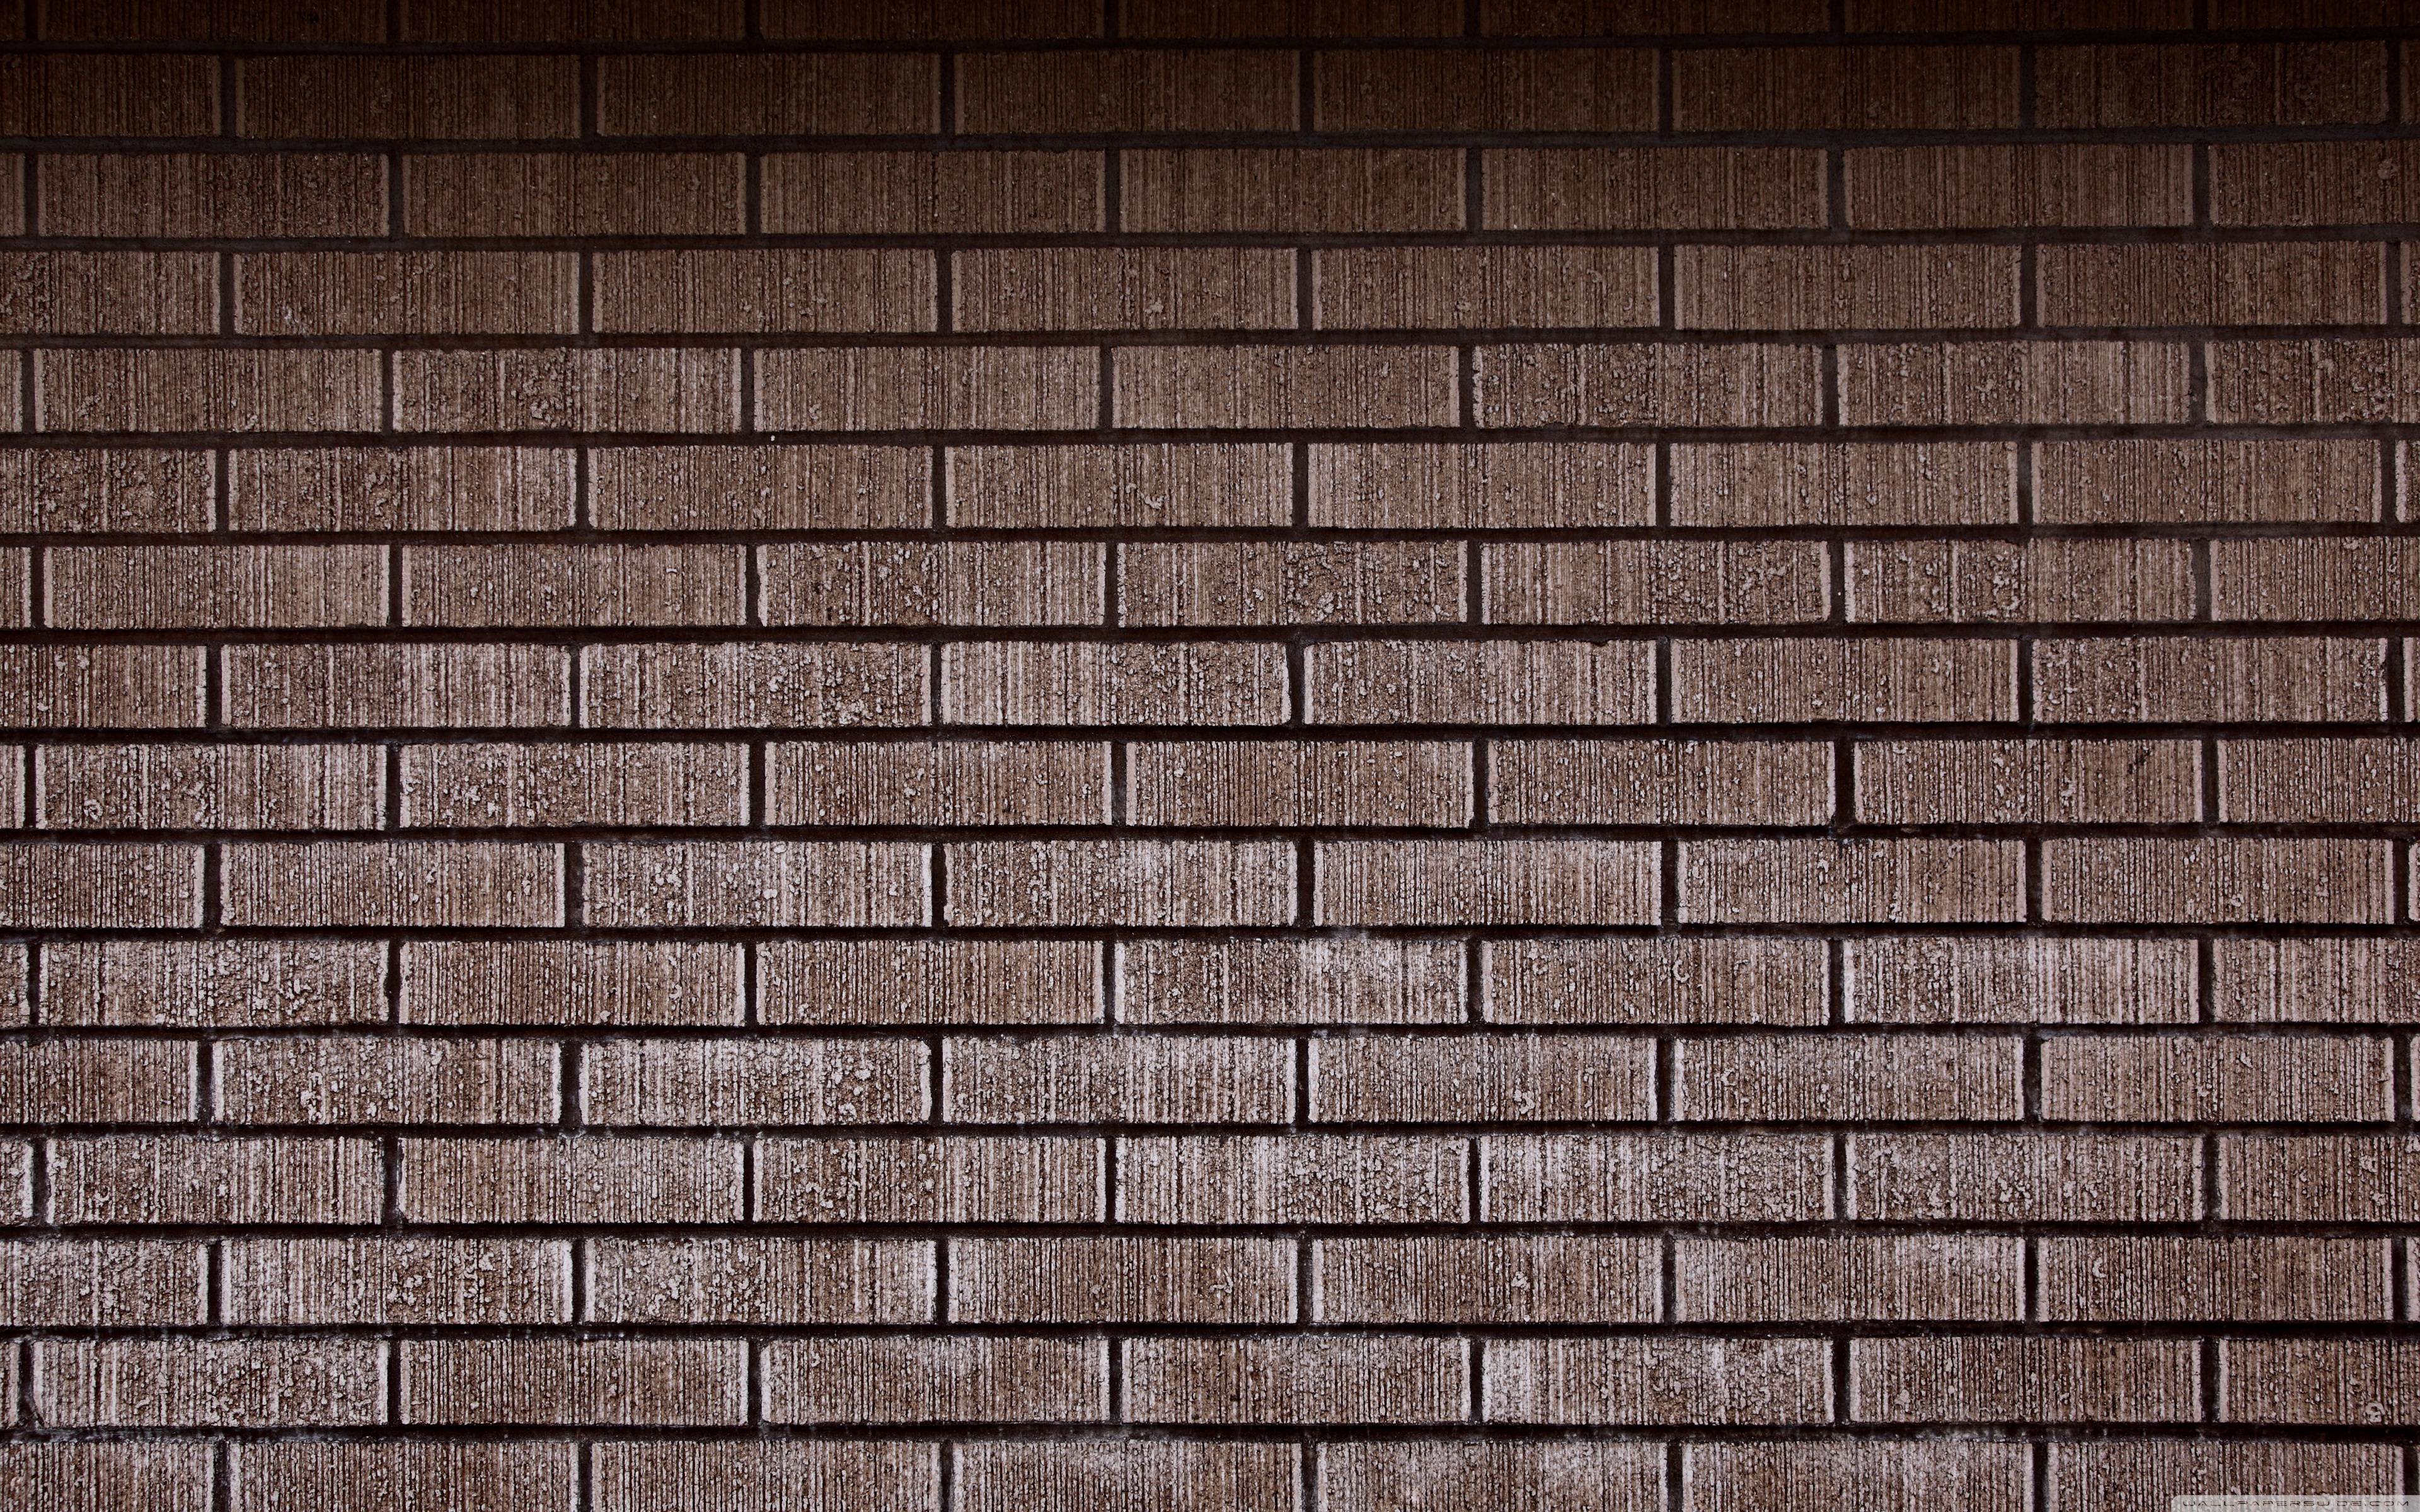 3d wallpaper hd for wall,brickwork,brick,wall,stone wall,pattern